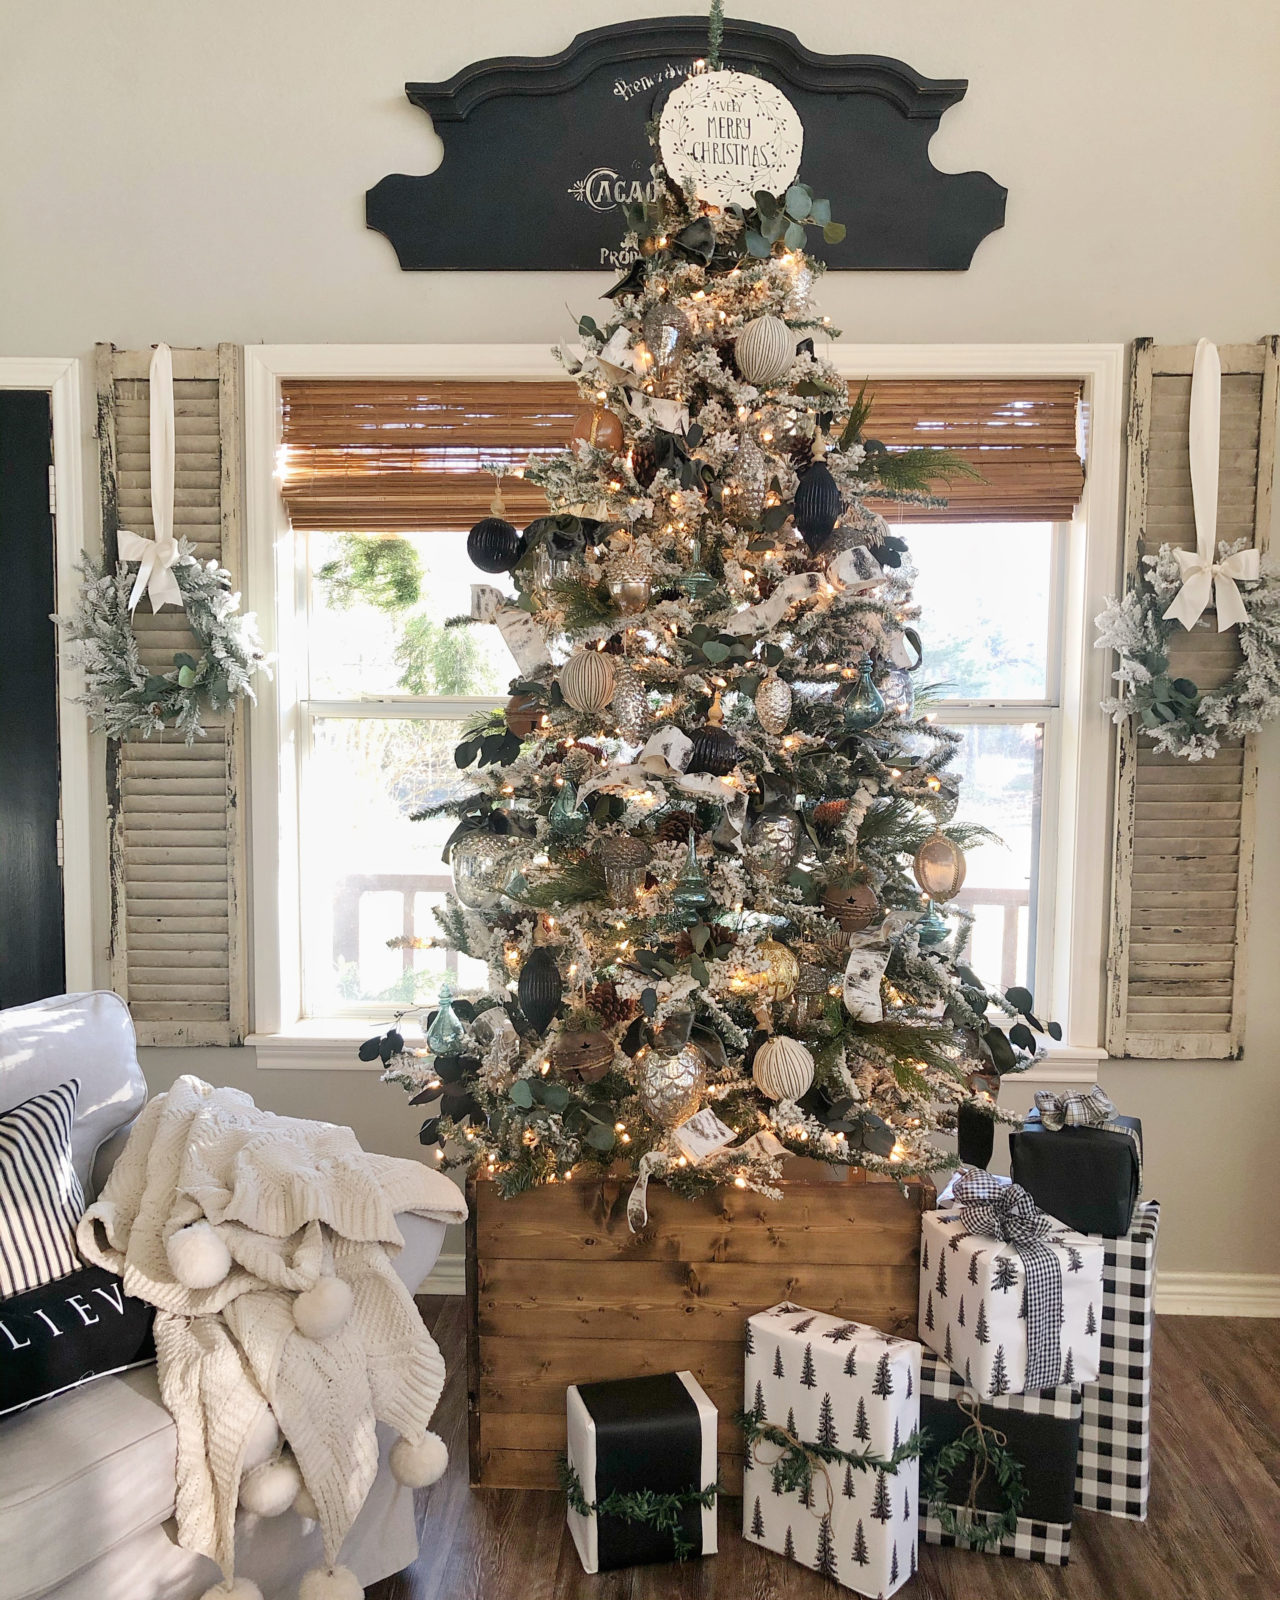 2020 Holiday Home Tour | Christmas Home Decorations